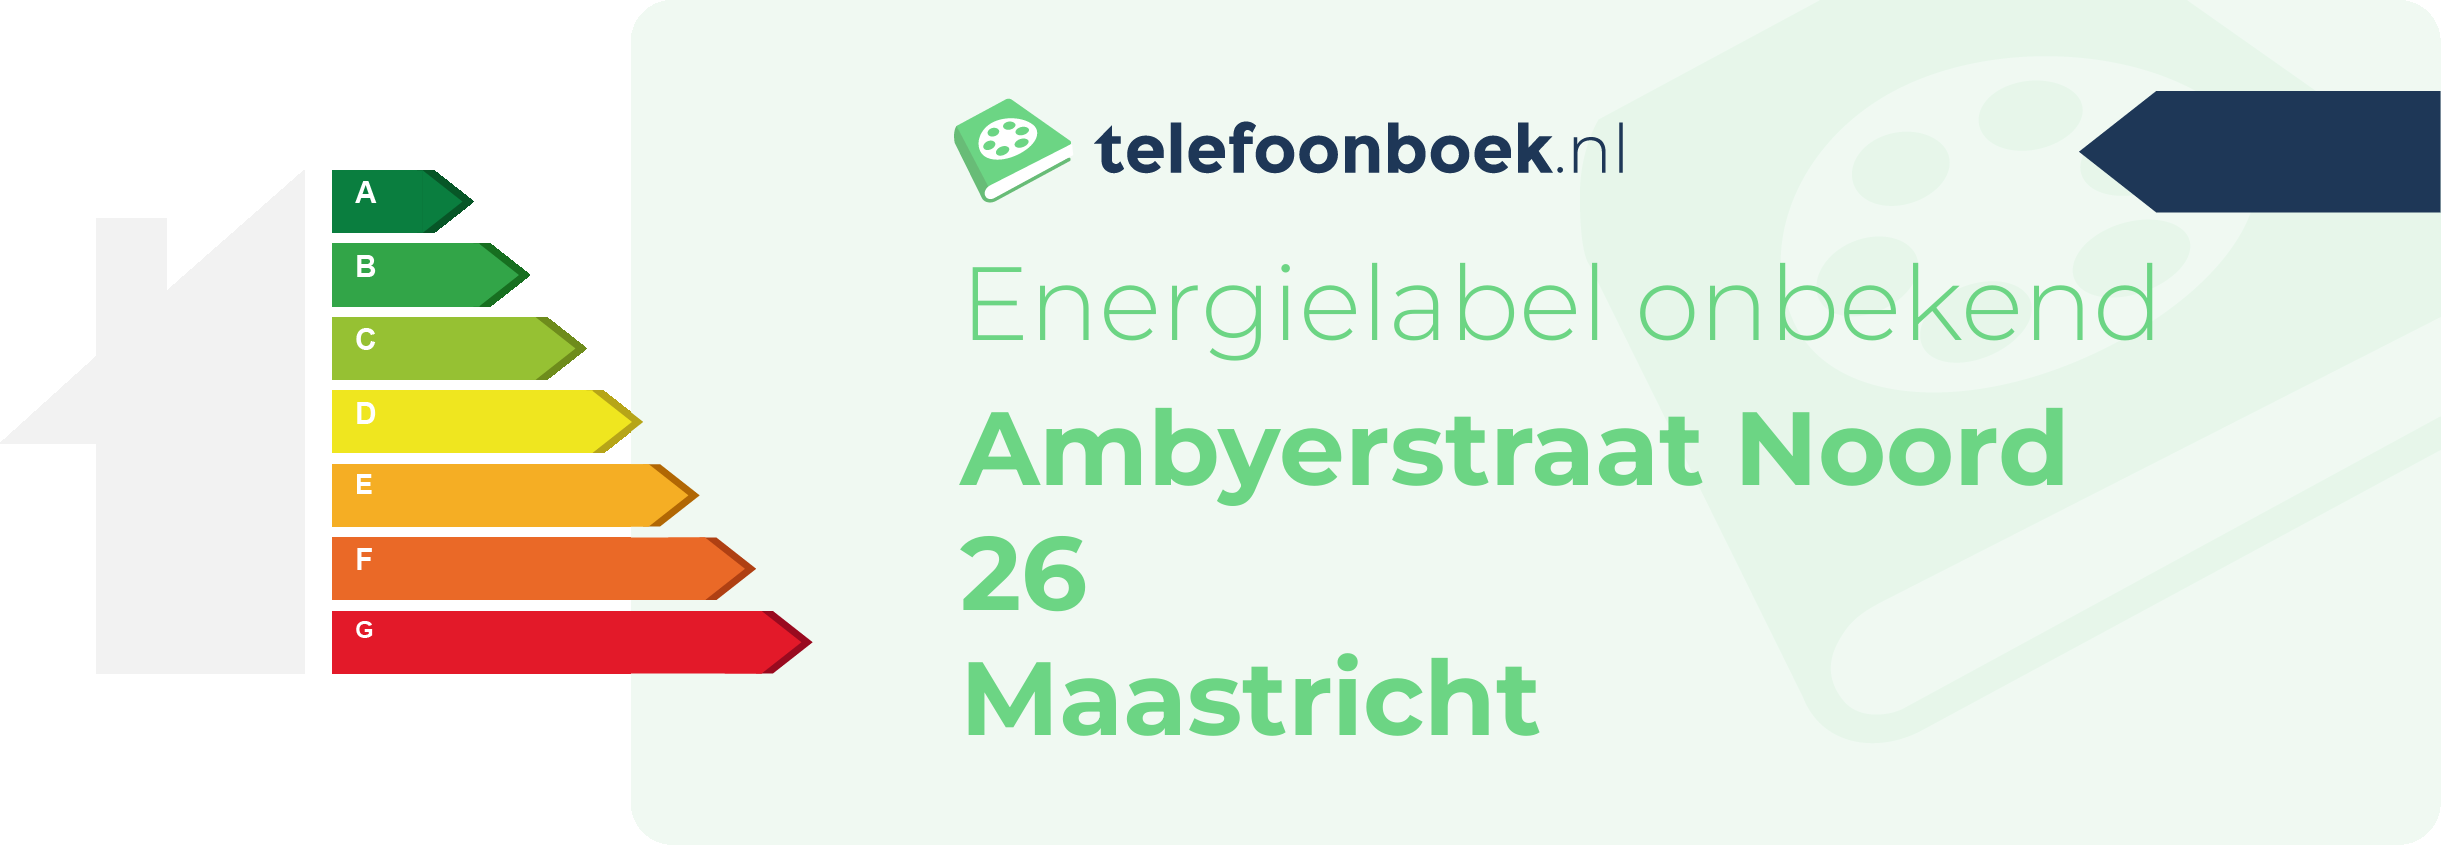 Energielabel Ambyerstraat Noord 26 Maastricht